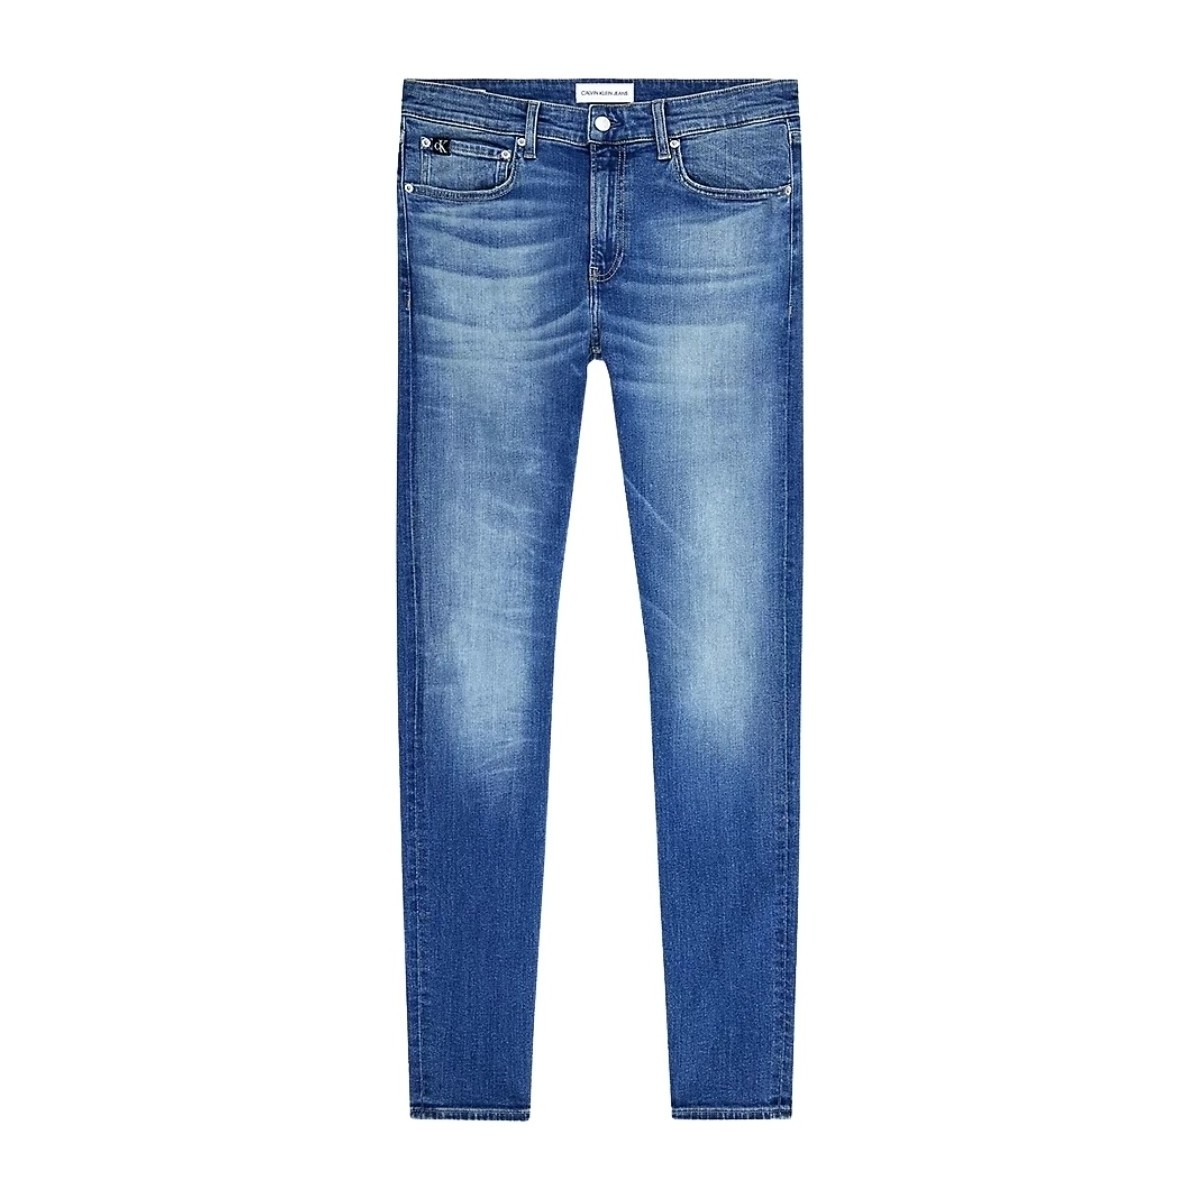 Vêtements Homme Jeans Calvin Klein Jeans Jean  ref 54190 1A4 Bleu Bleu